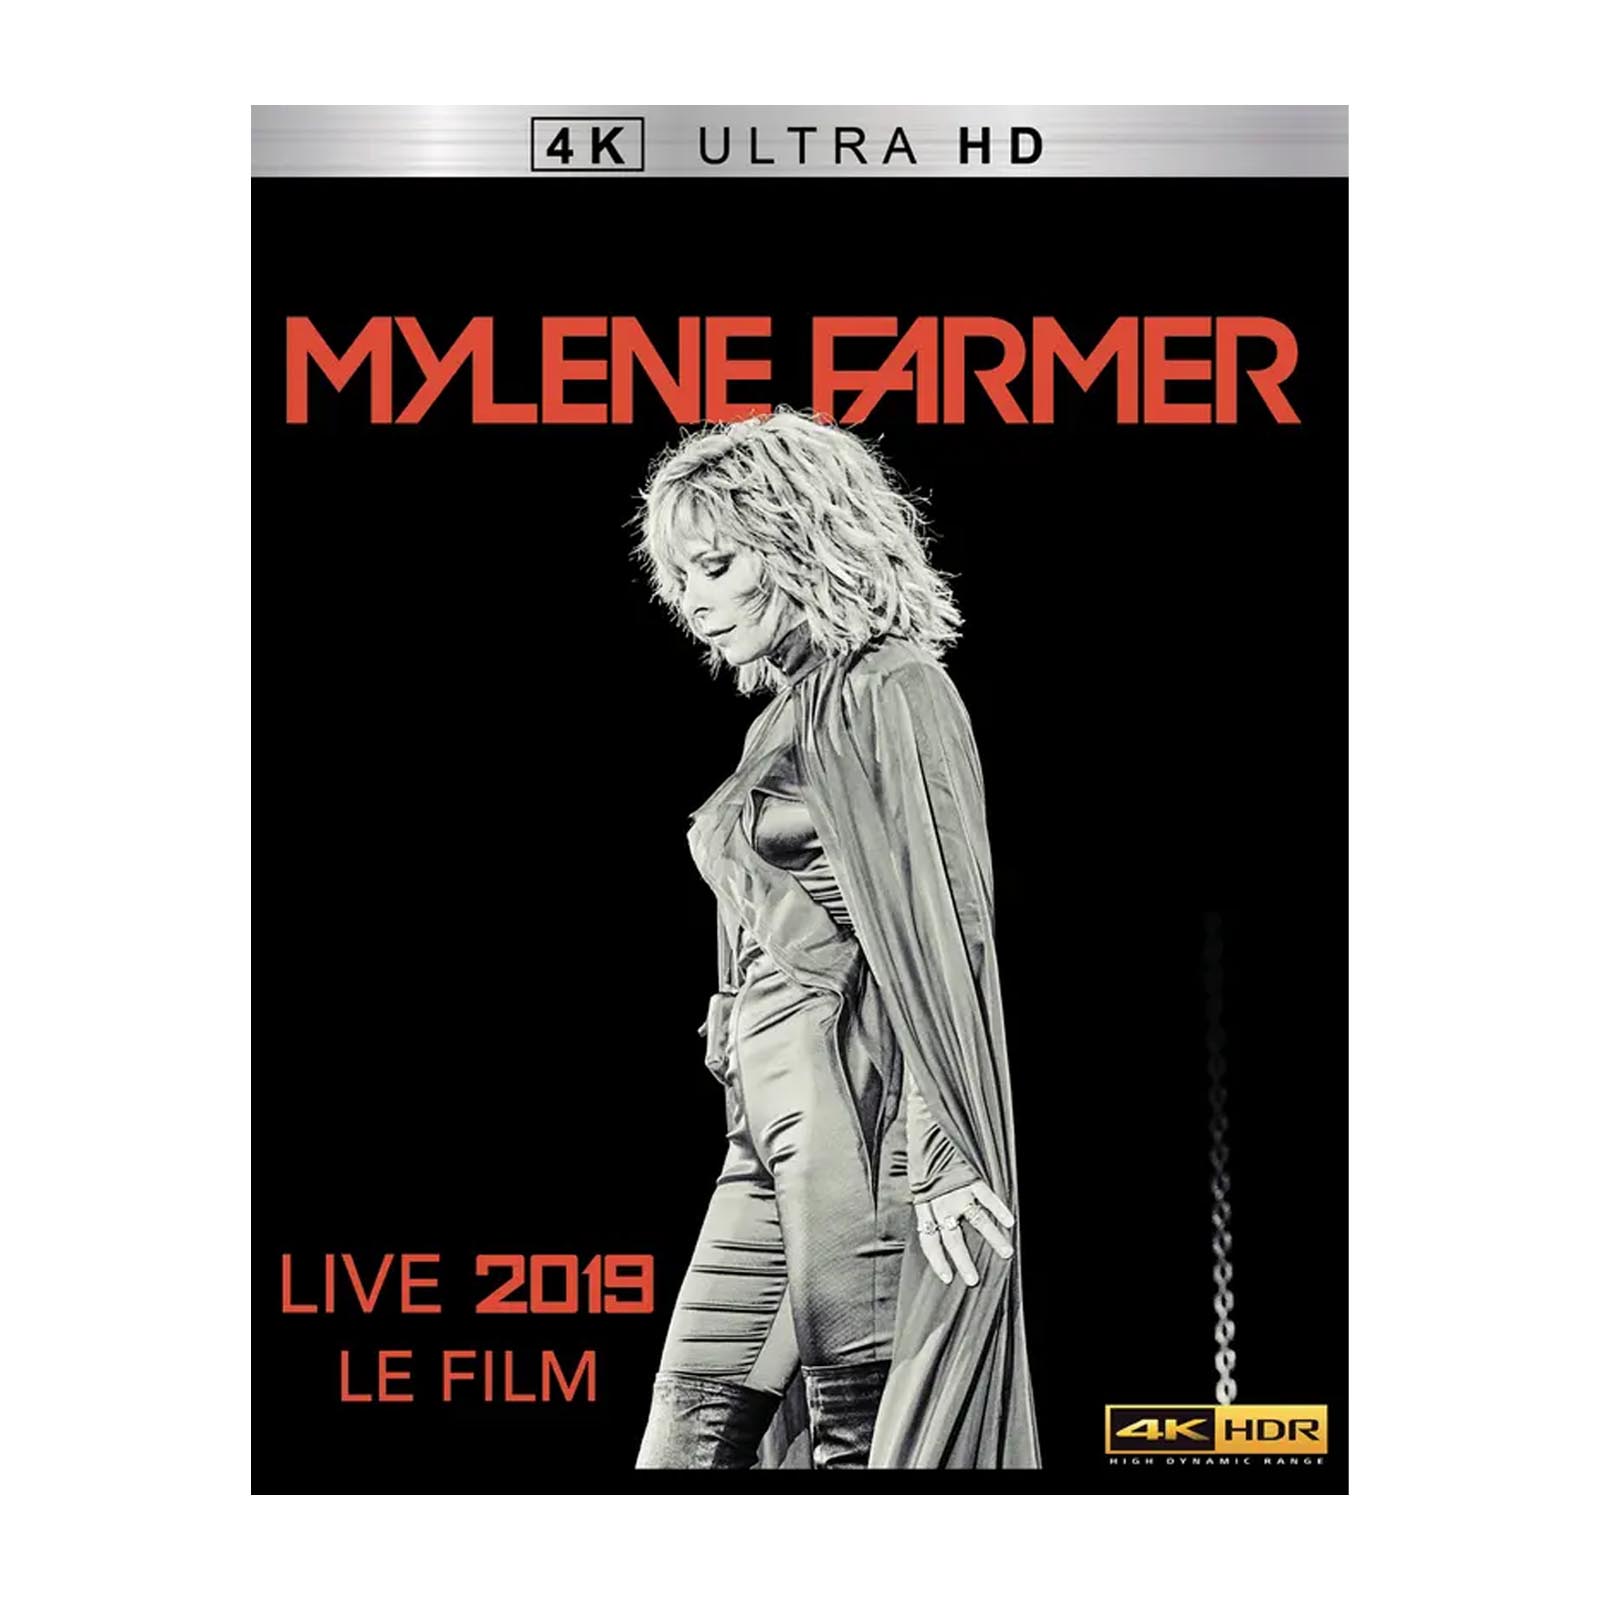 Mylene Farmer – Dal vivo 2019 Le Film